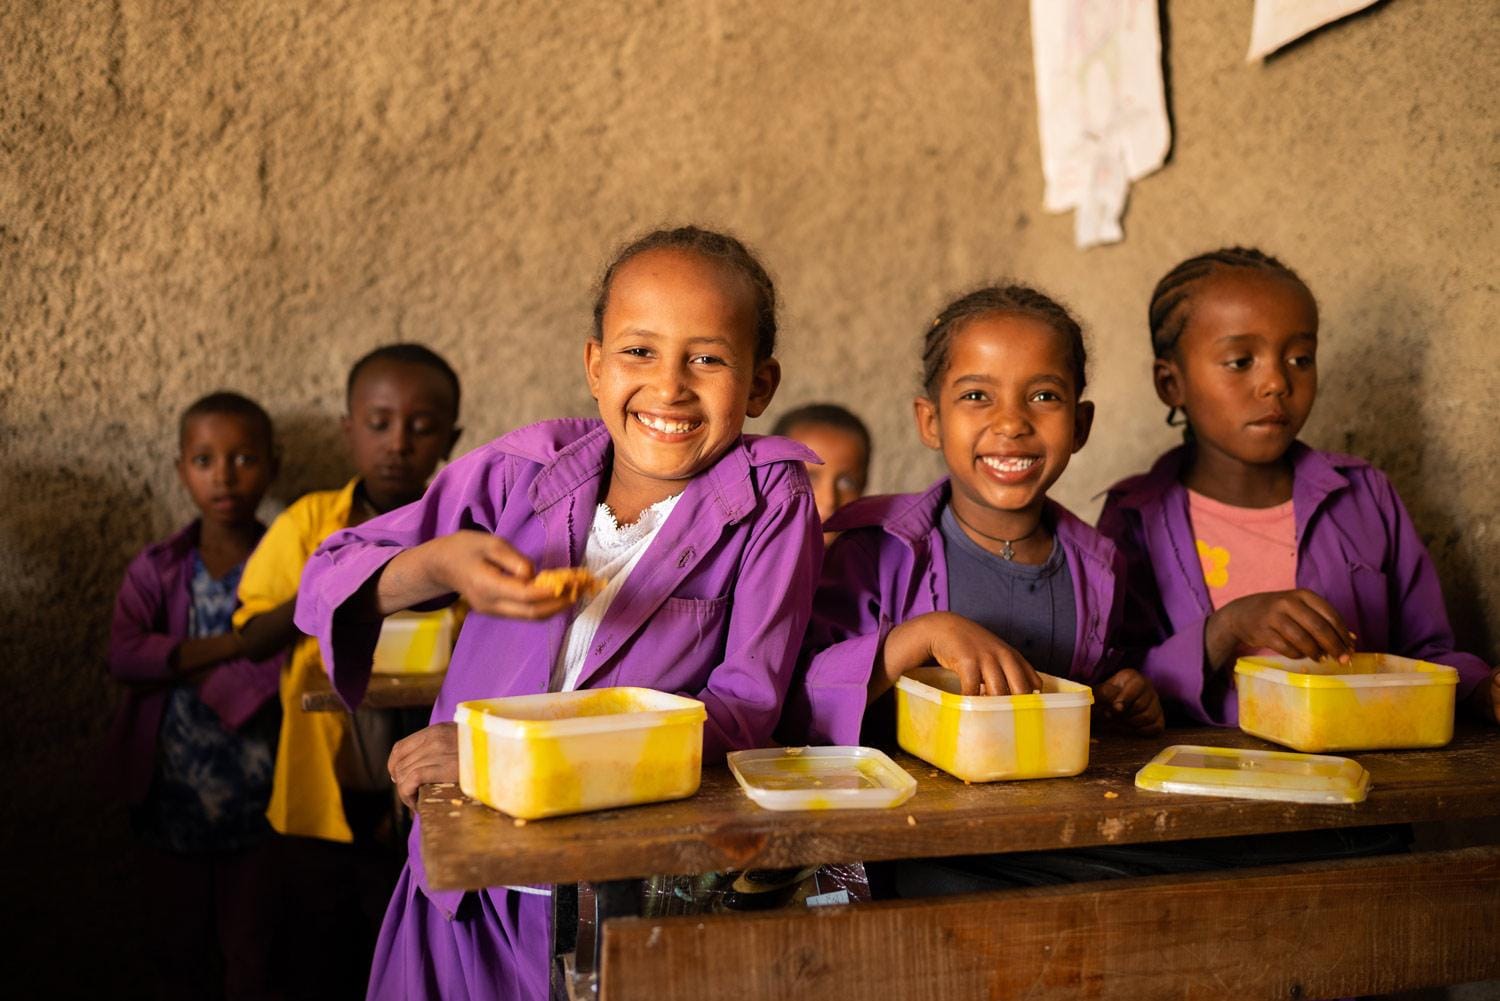 Compassion International children eating a meal together